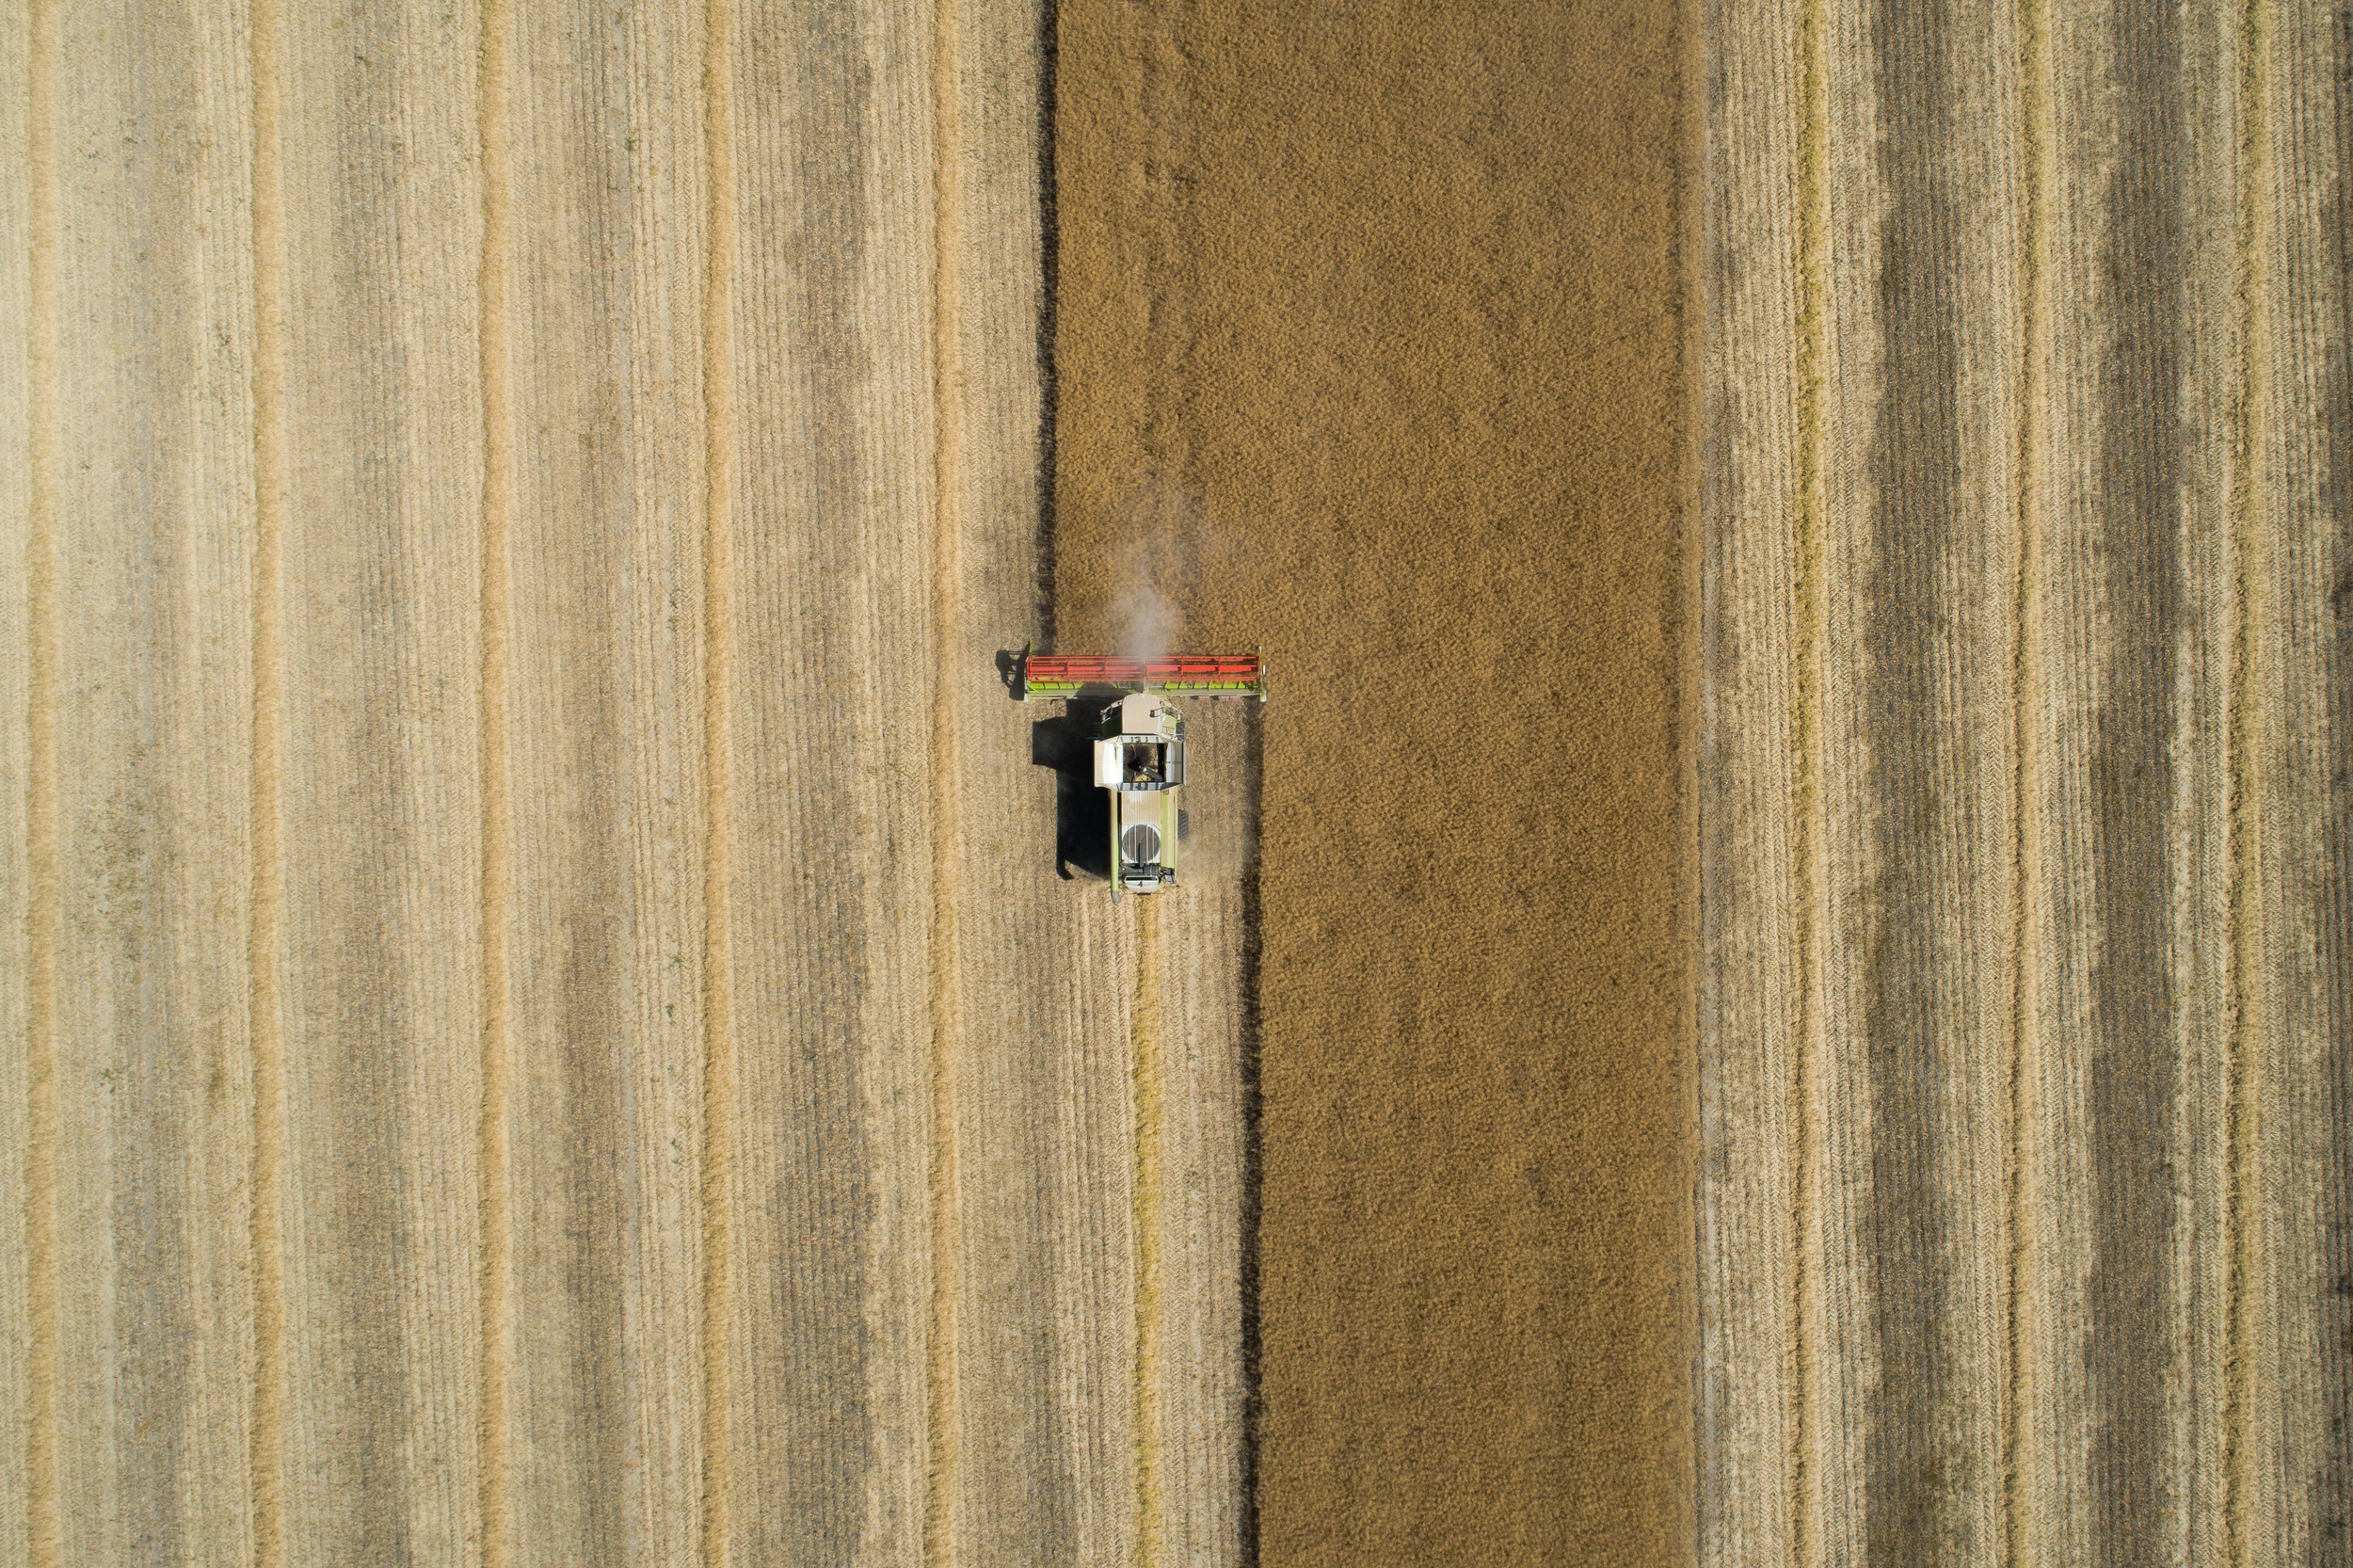 Traktor høster korn på dansk mark